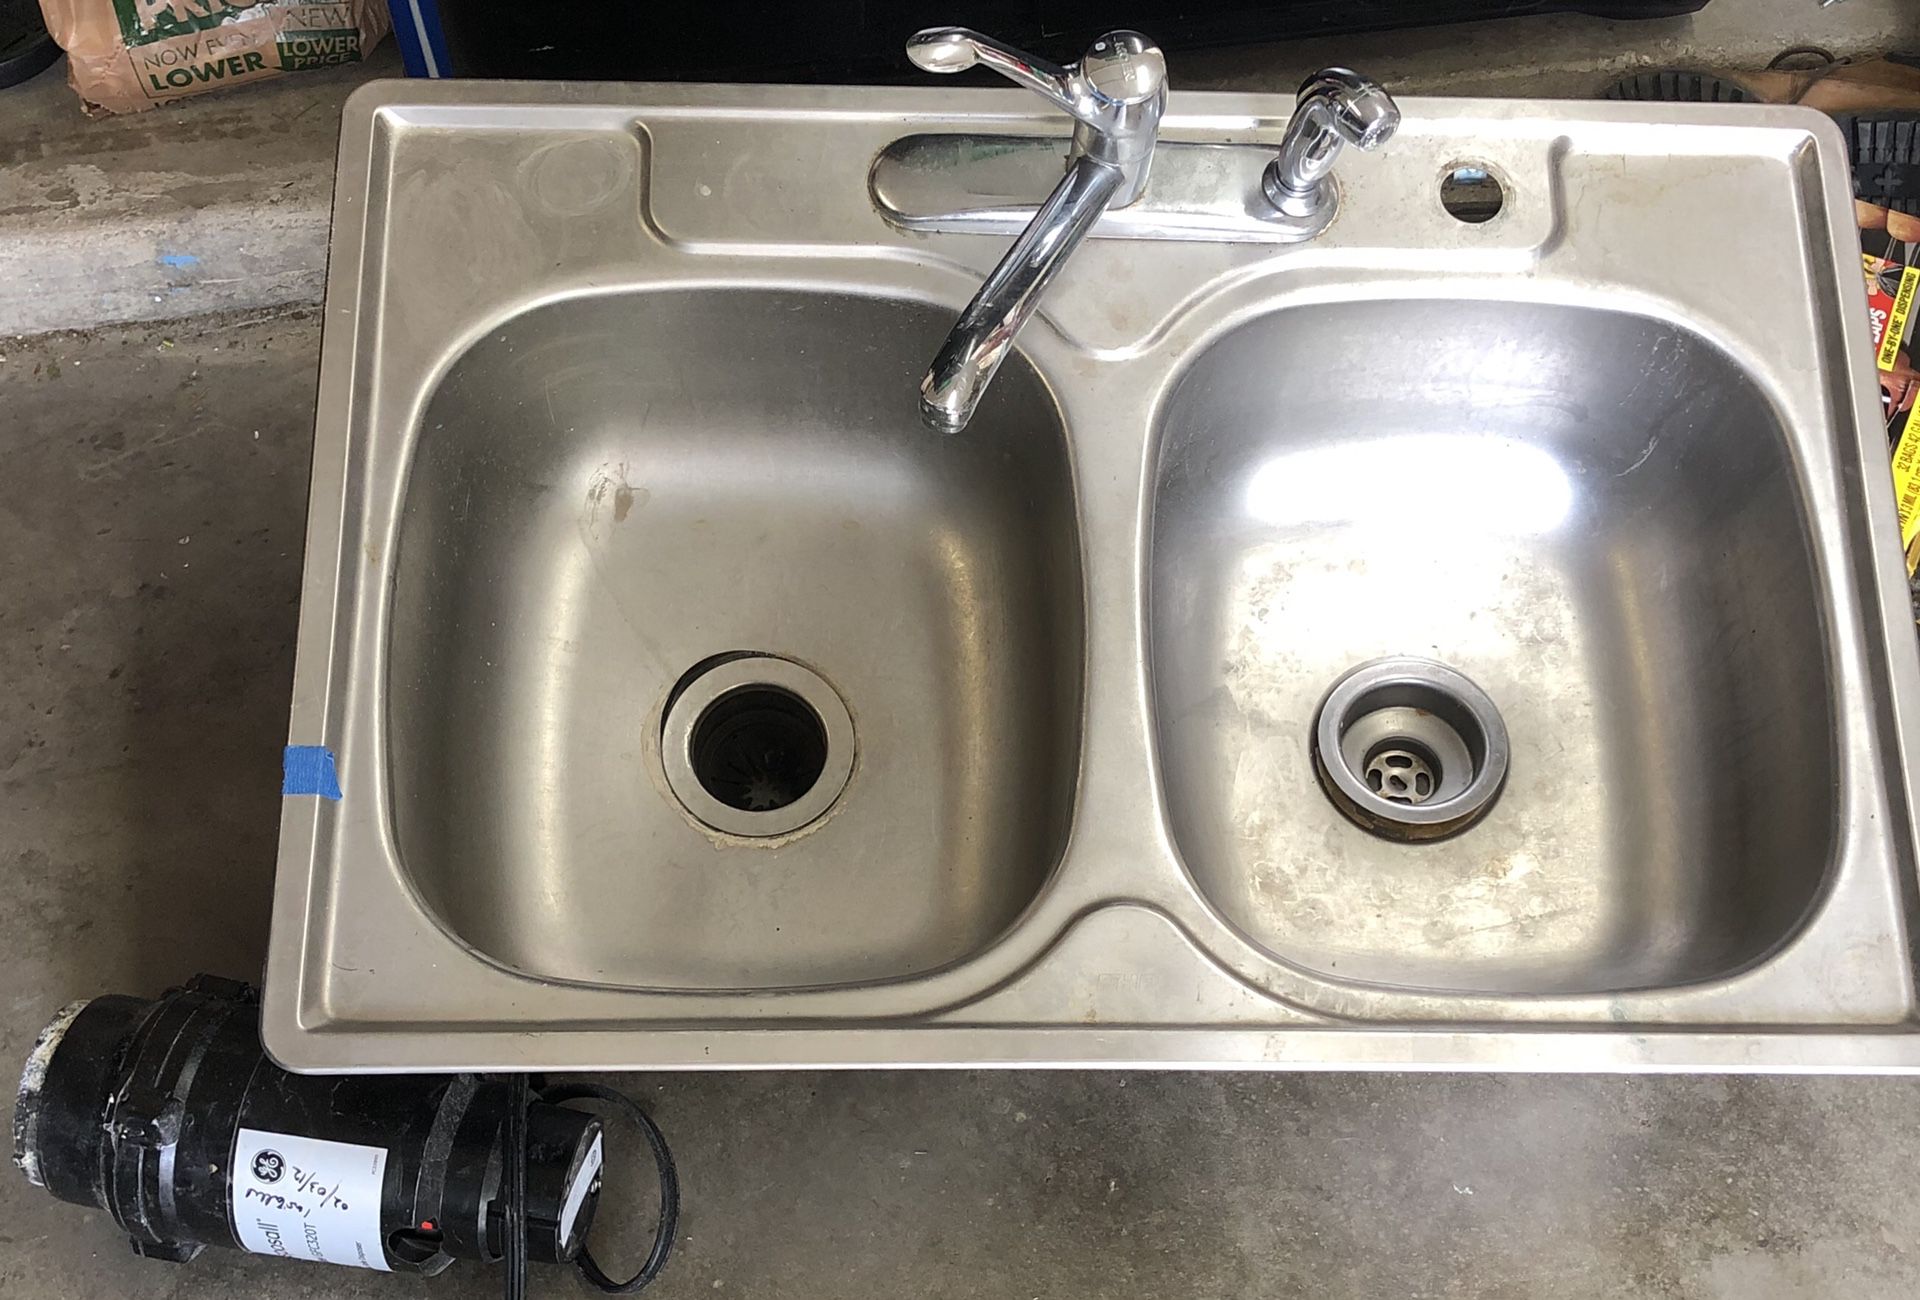 Moen double kitchen sink, faucet & garbage disposal